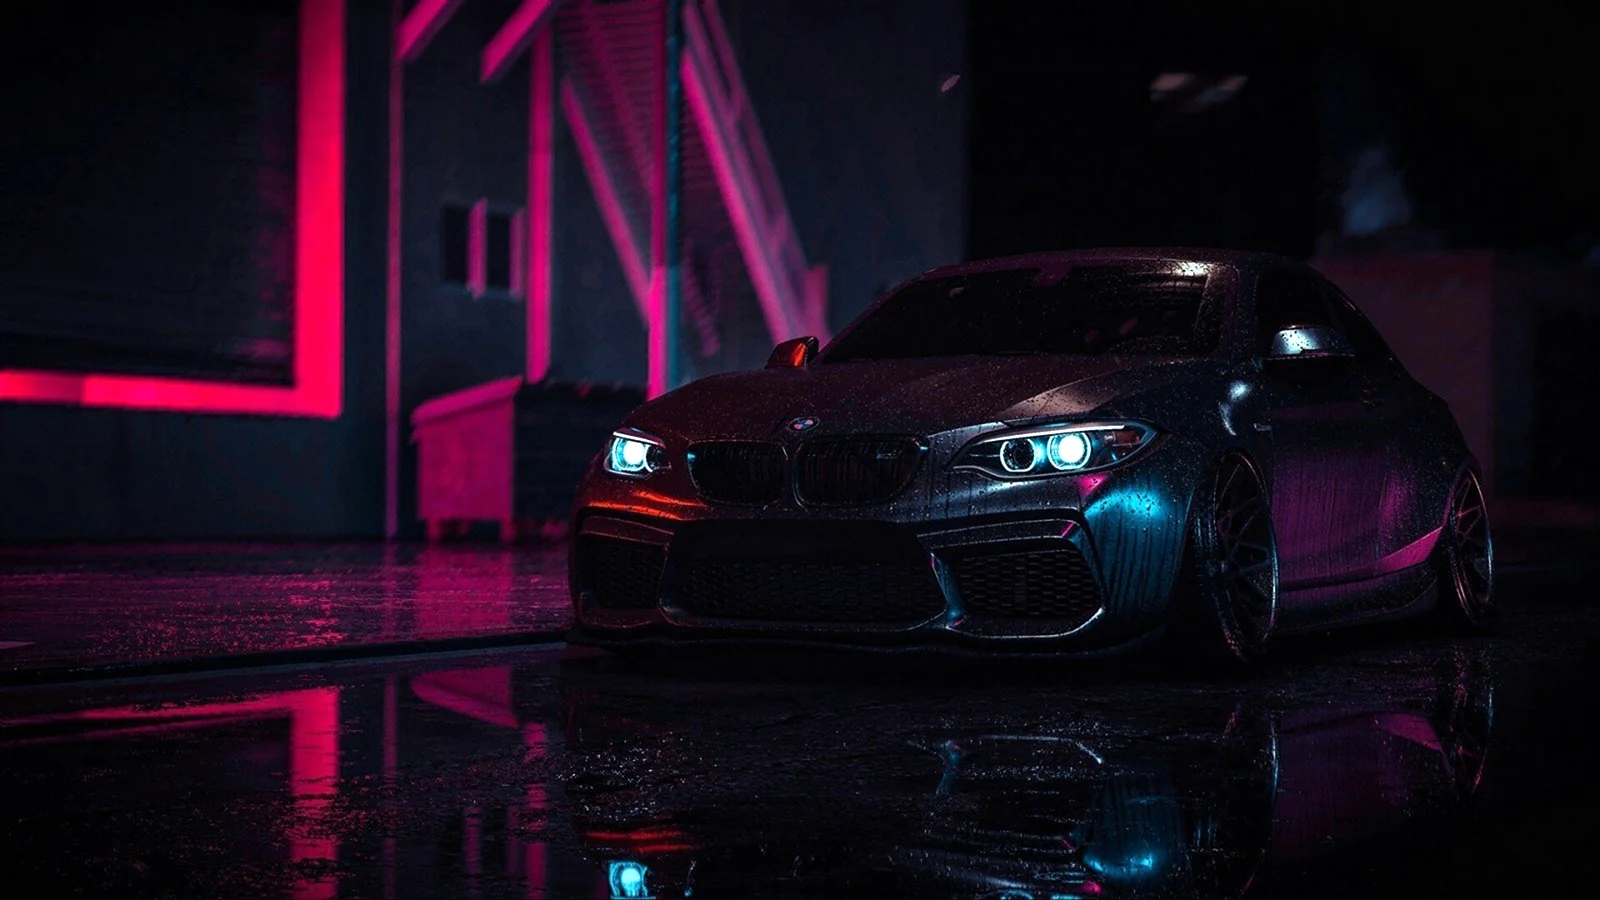 BMW m5 неон